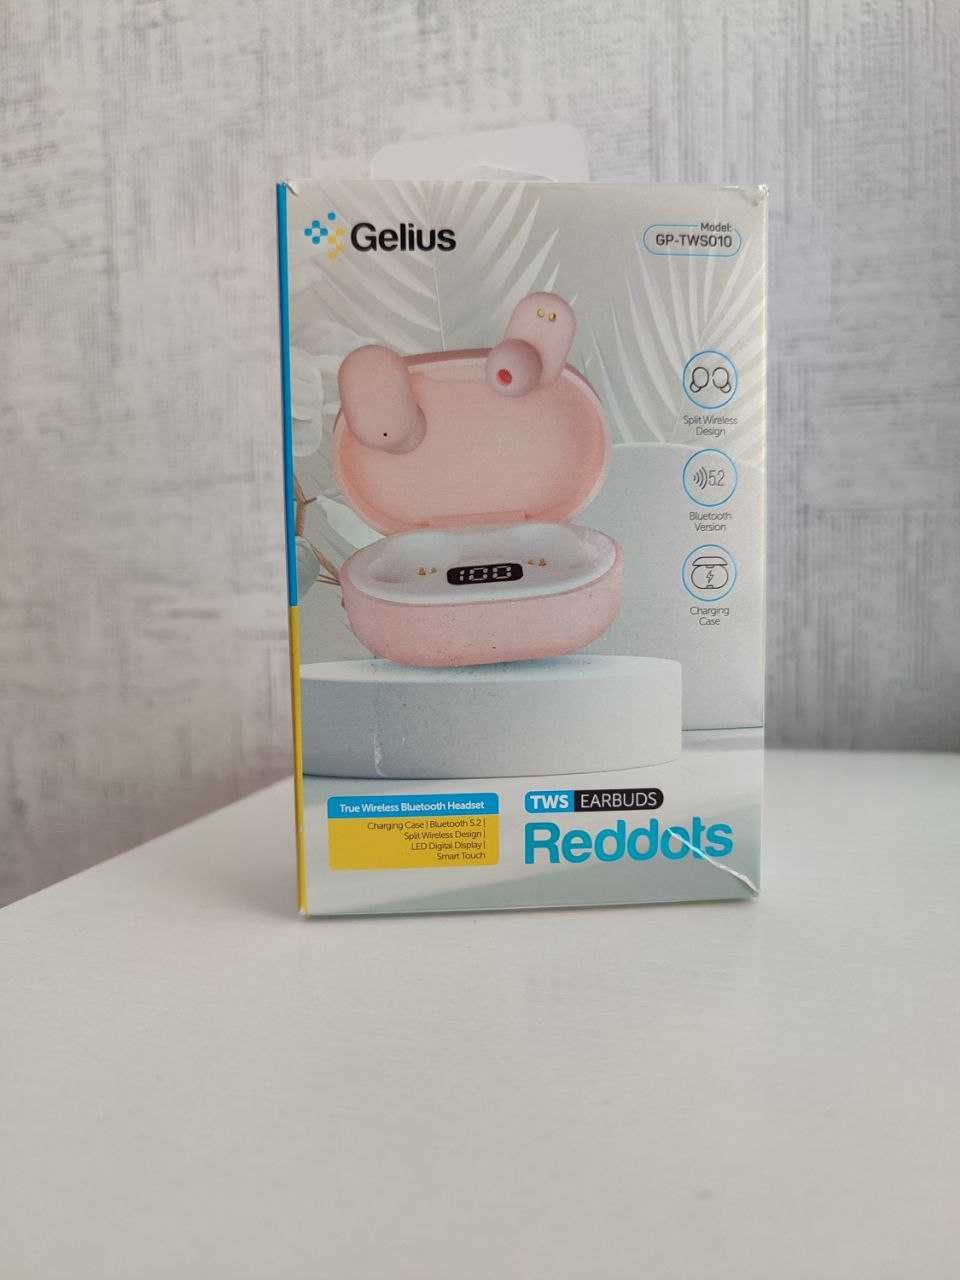 Gelius Pro Reddots TWS Earbuds